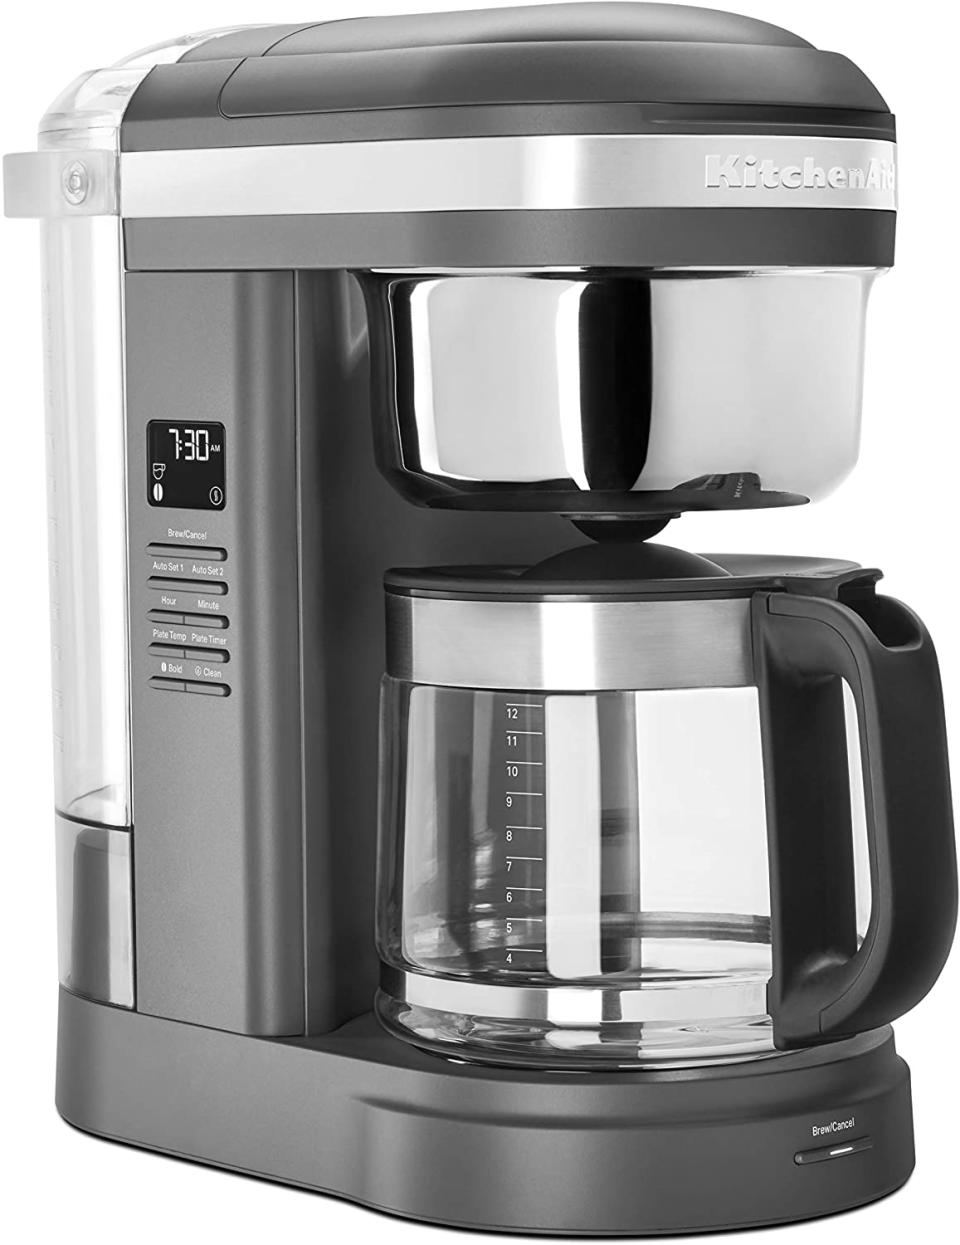 KitchenAid Drip Coffee Maker, 12 Cup. Image via Amazon.